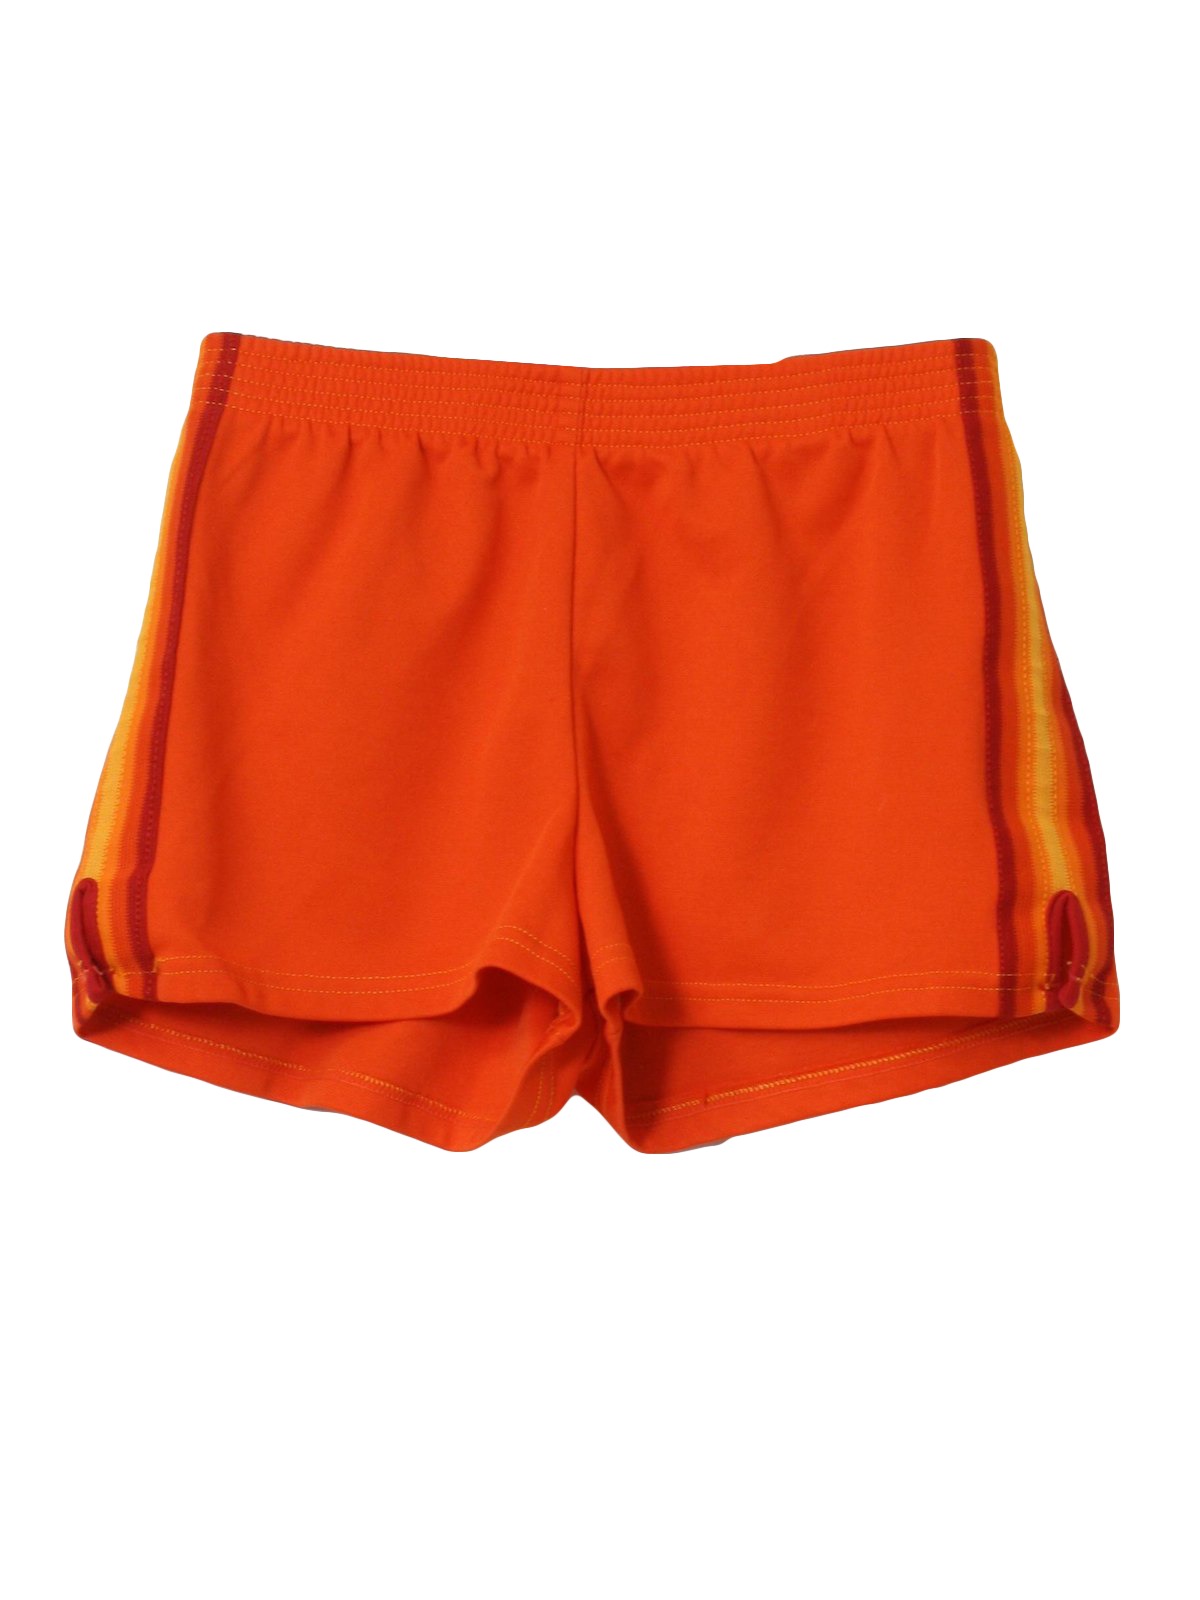 Retro 1970s Shorts: 70s -Contend Her- Womens orange background stretch ...